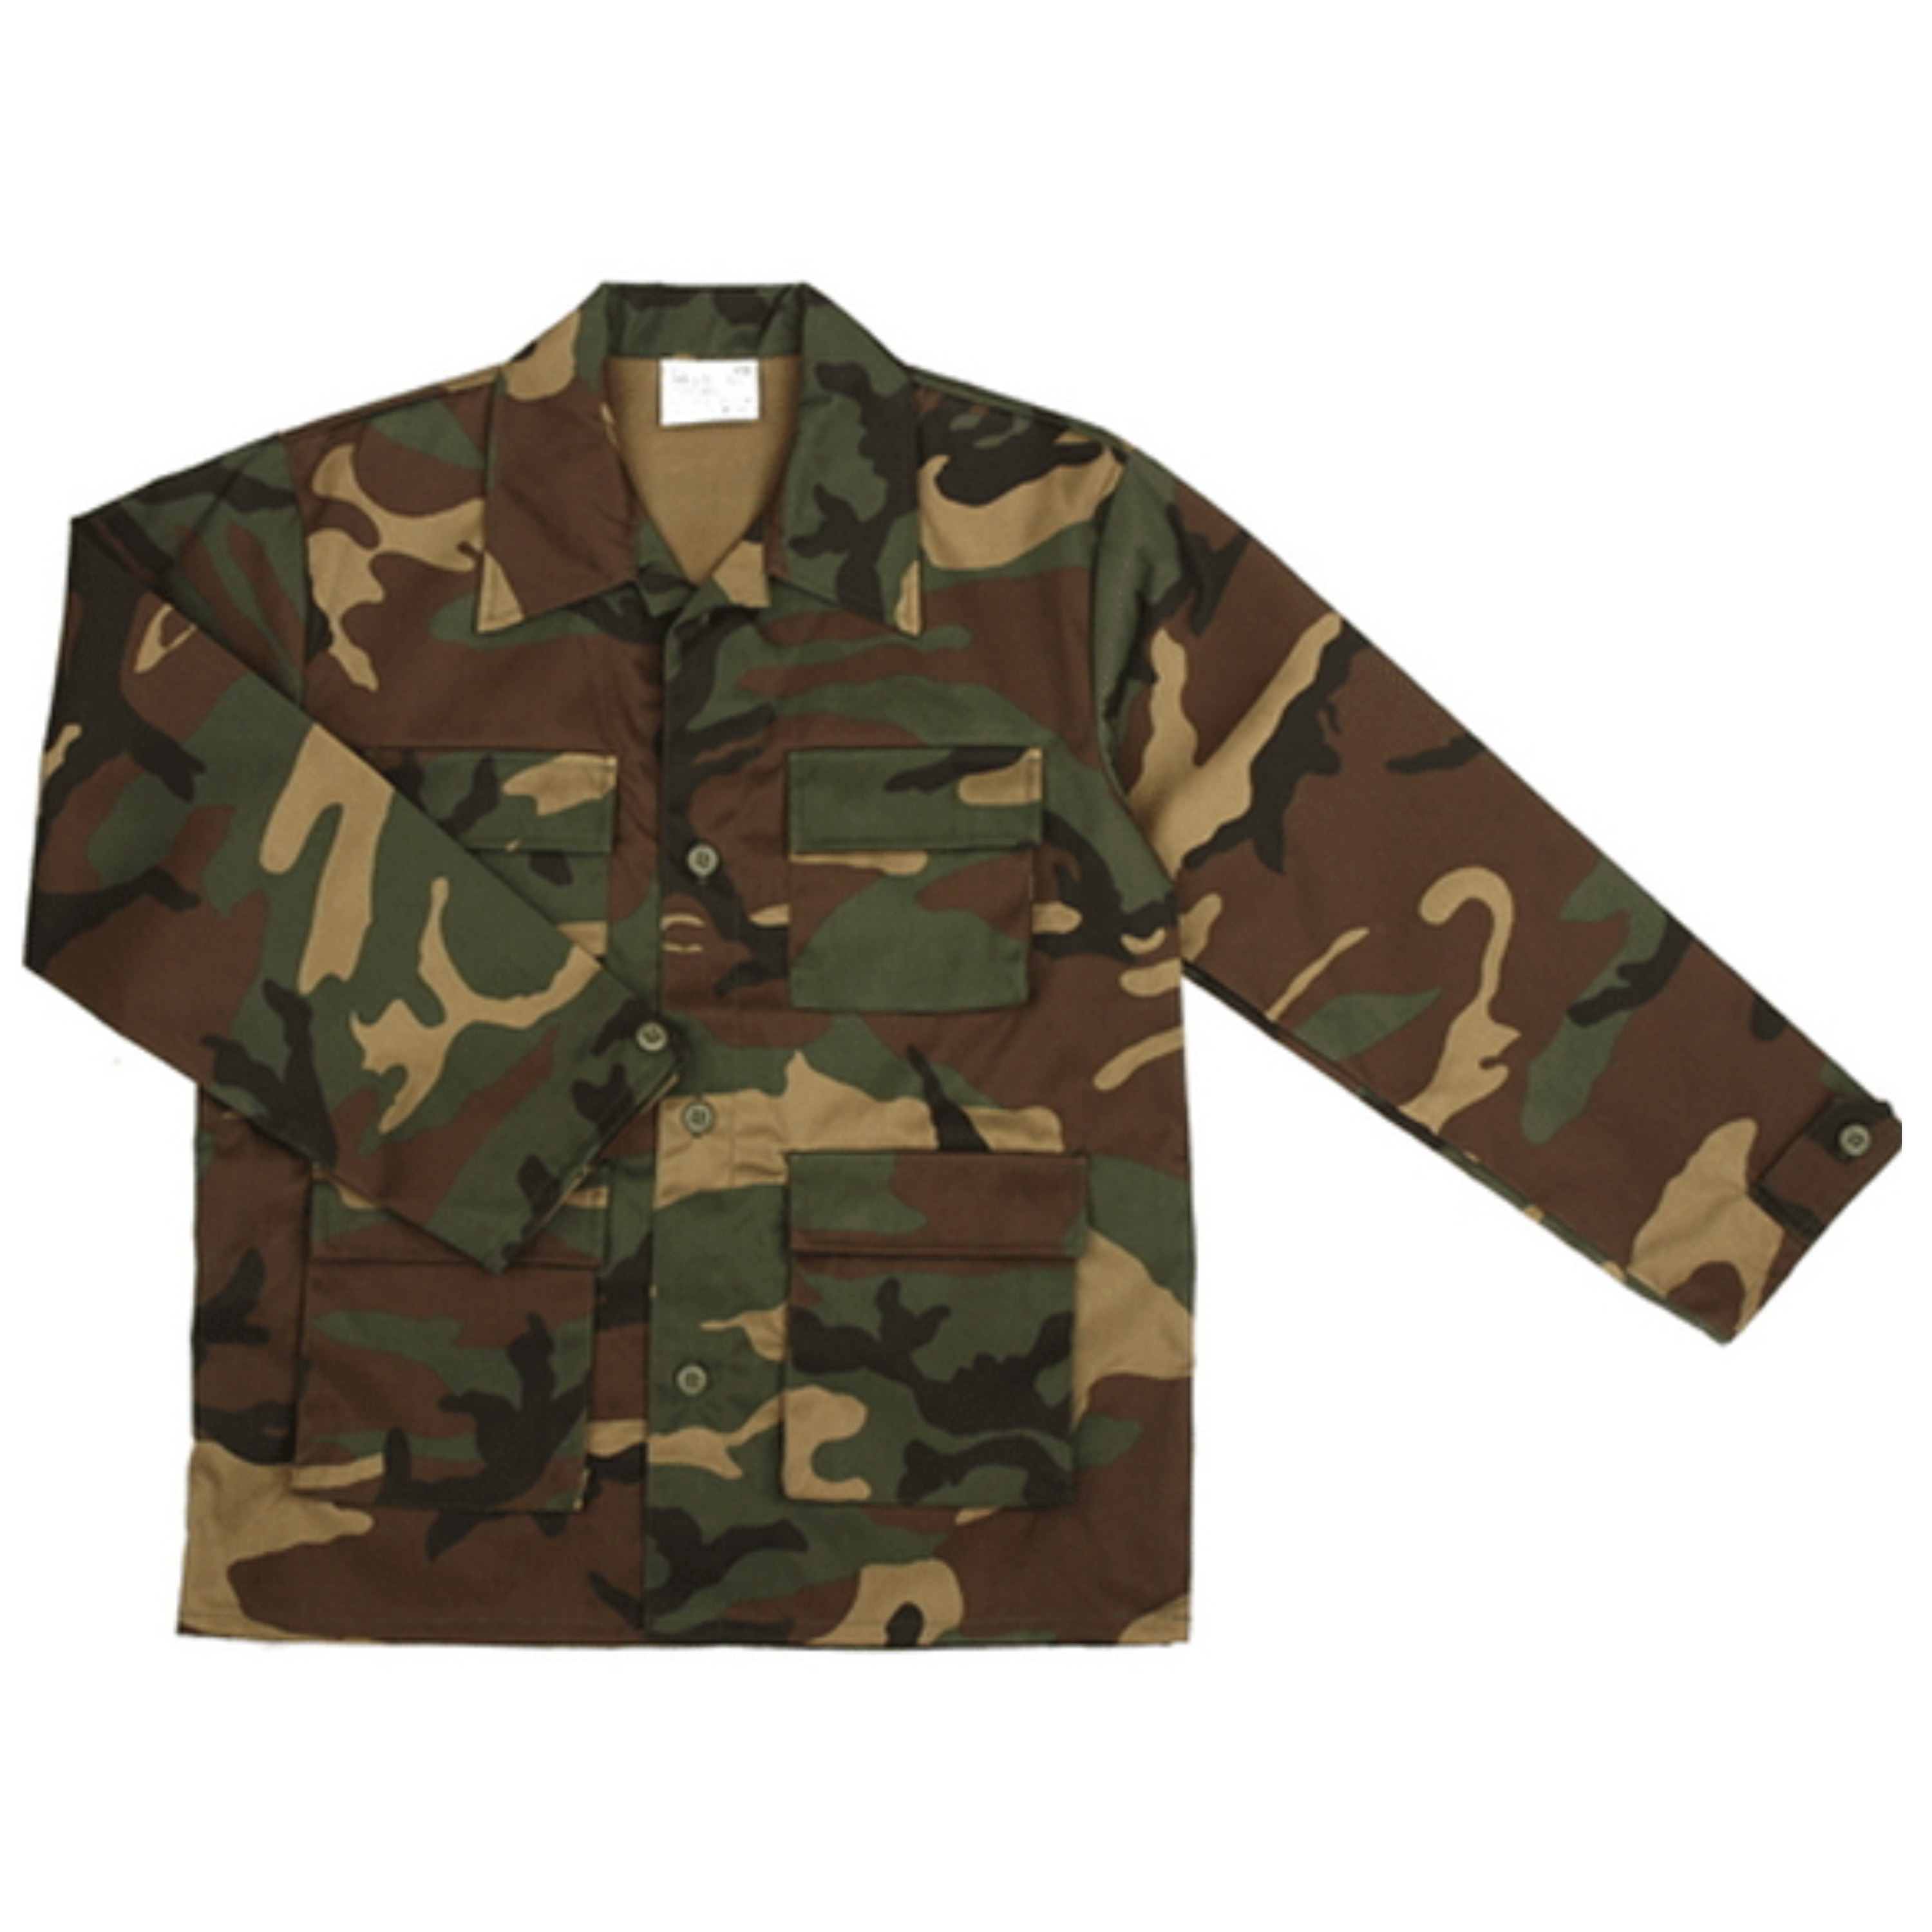 Army jas voor kinderen woodland camouflage L (134-146) -